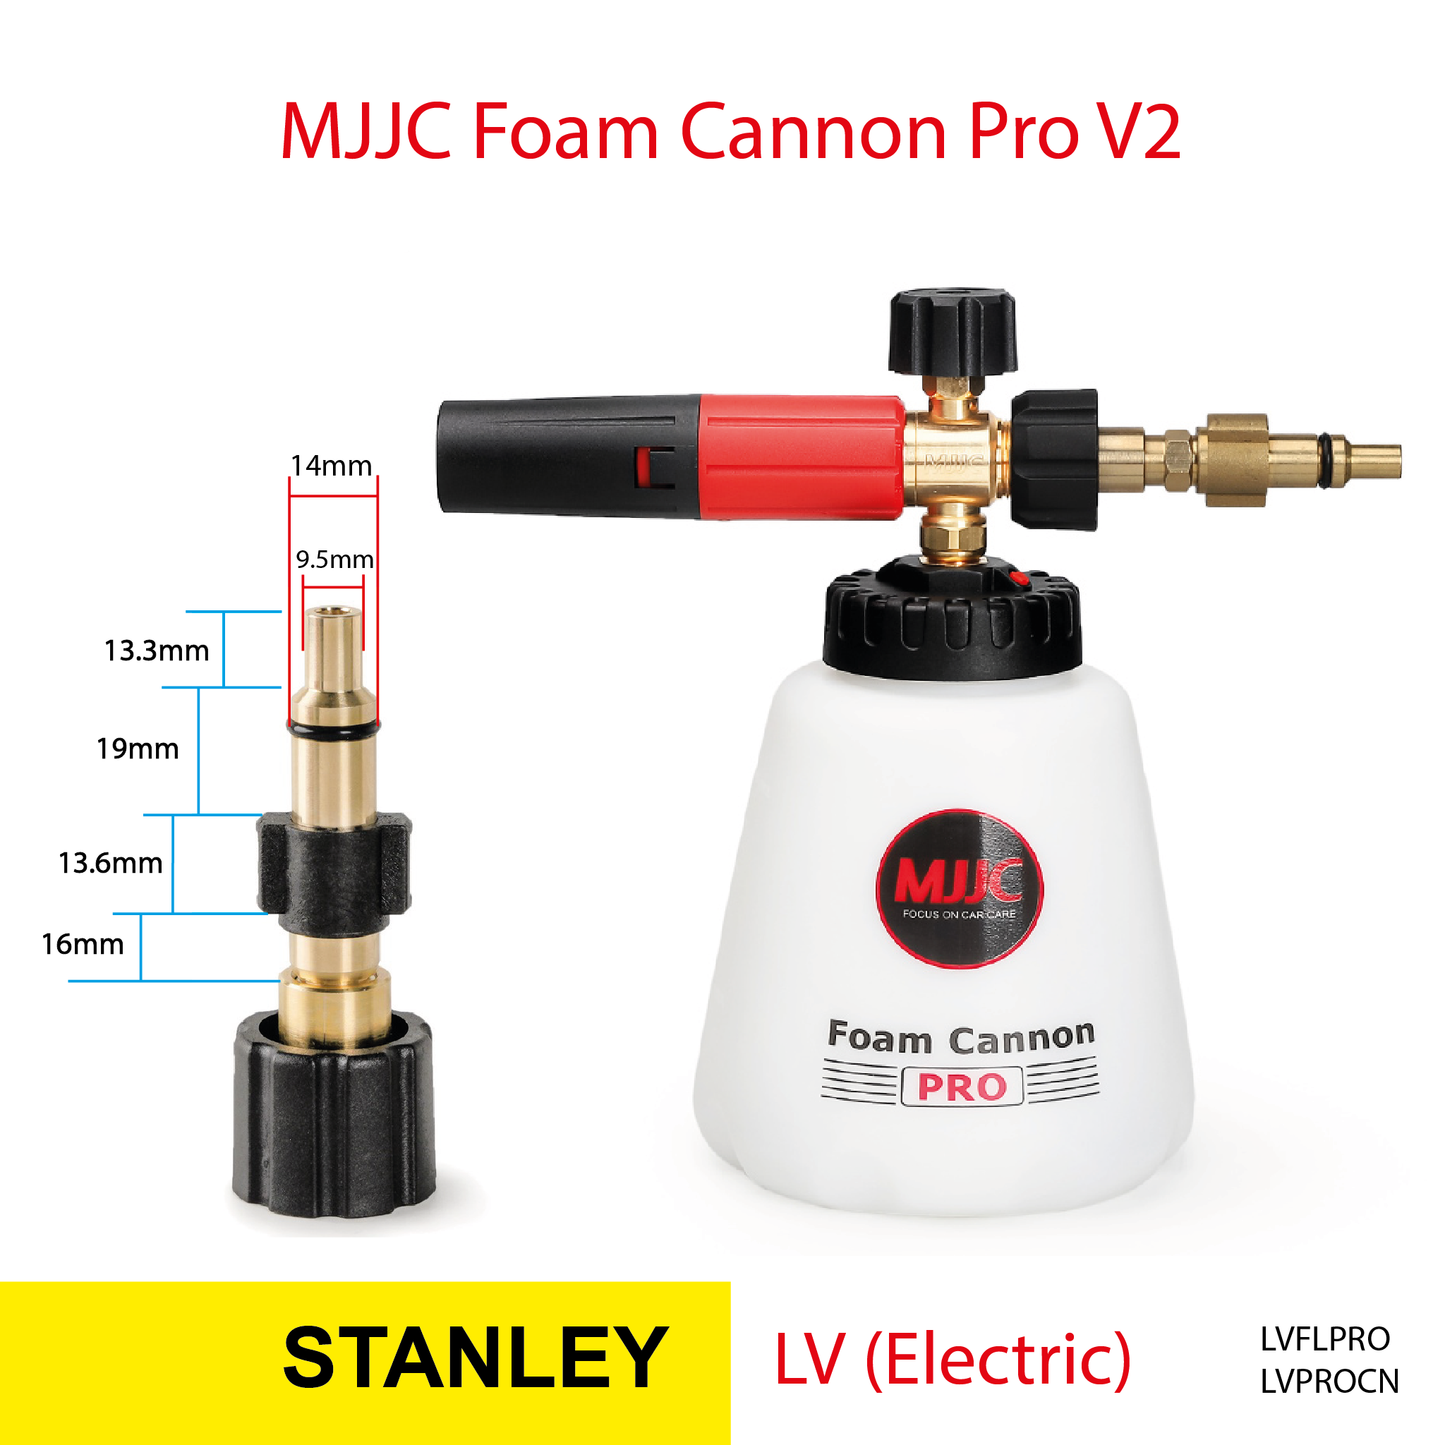 Stanley pressure washer - MJJC Foam Cannon Pro V2 (Pressure Washer Snow Foam Lance Gun)